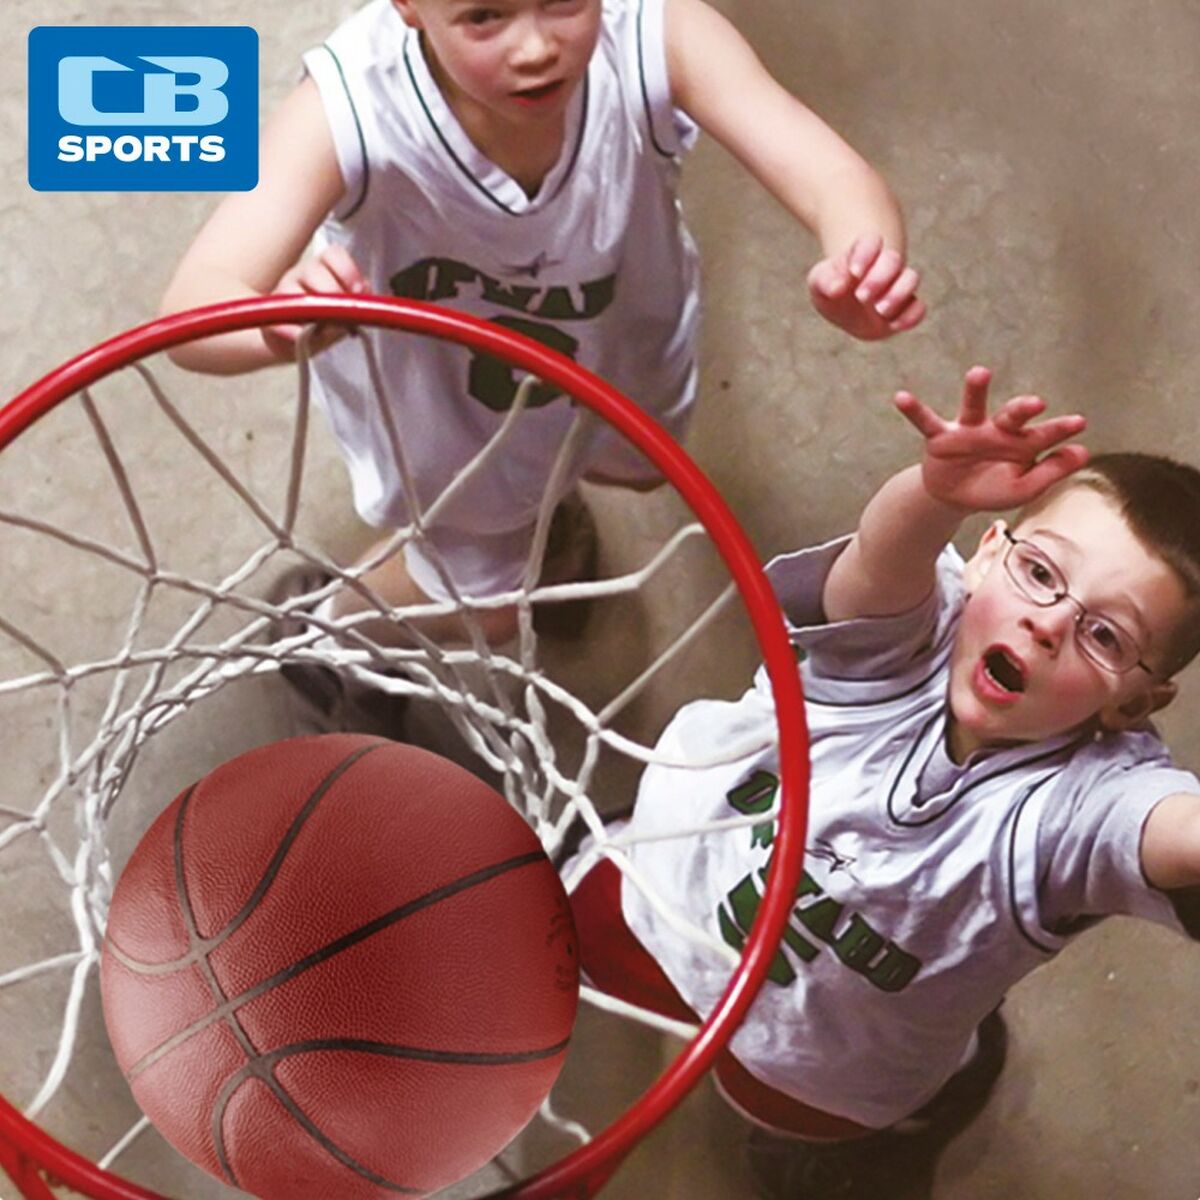 Basketkorg Colorbaby 39 x 28 x 39 cm-Leksaker och spel, Sport och utomhus-Colorbaby-peaceofhome.se